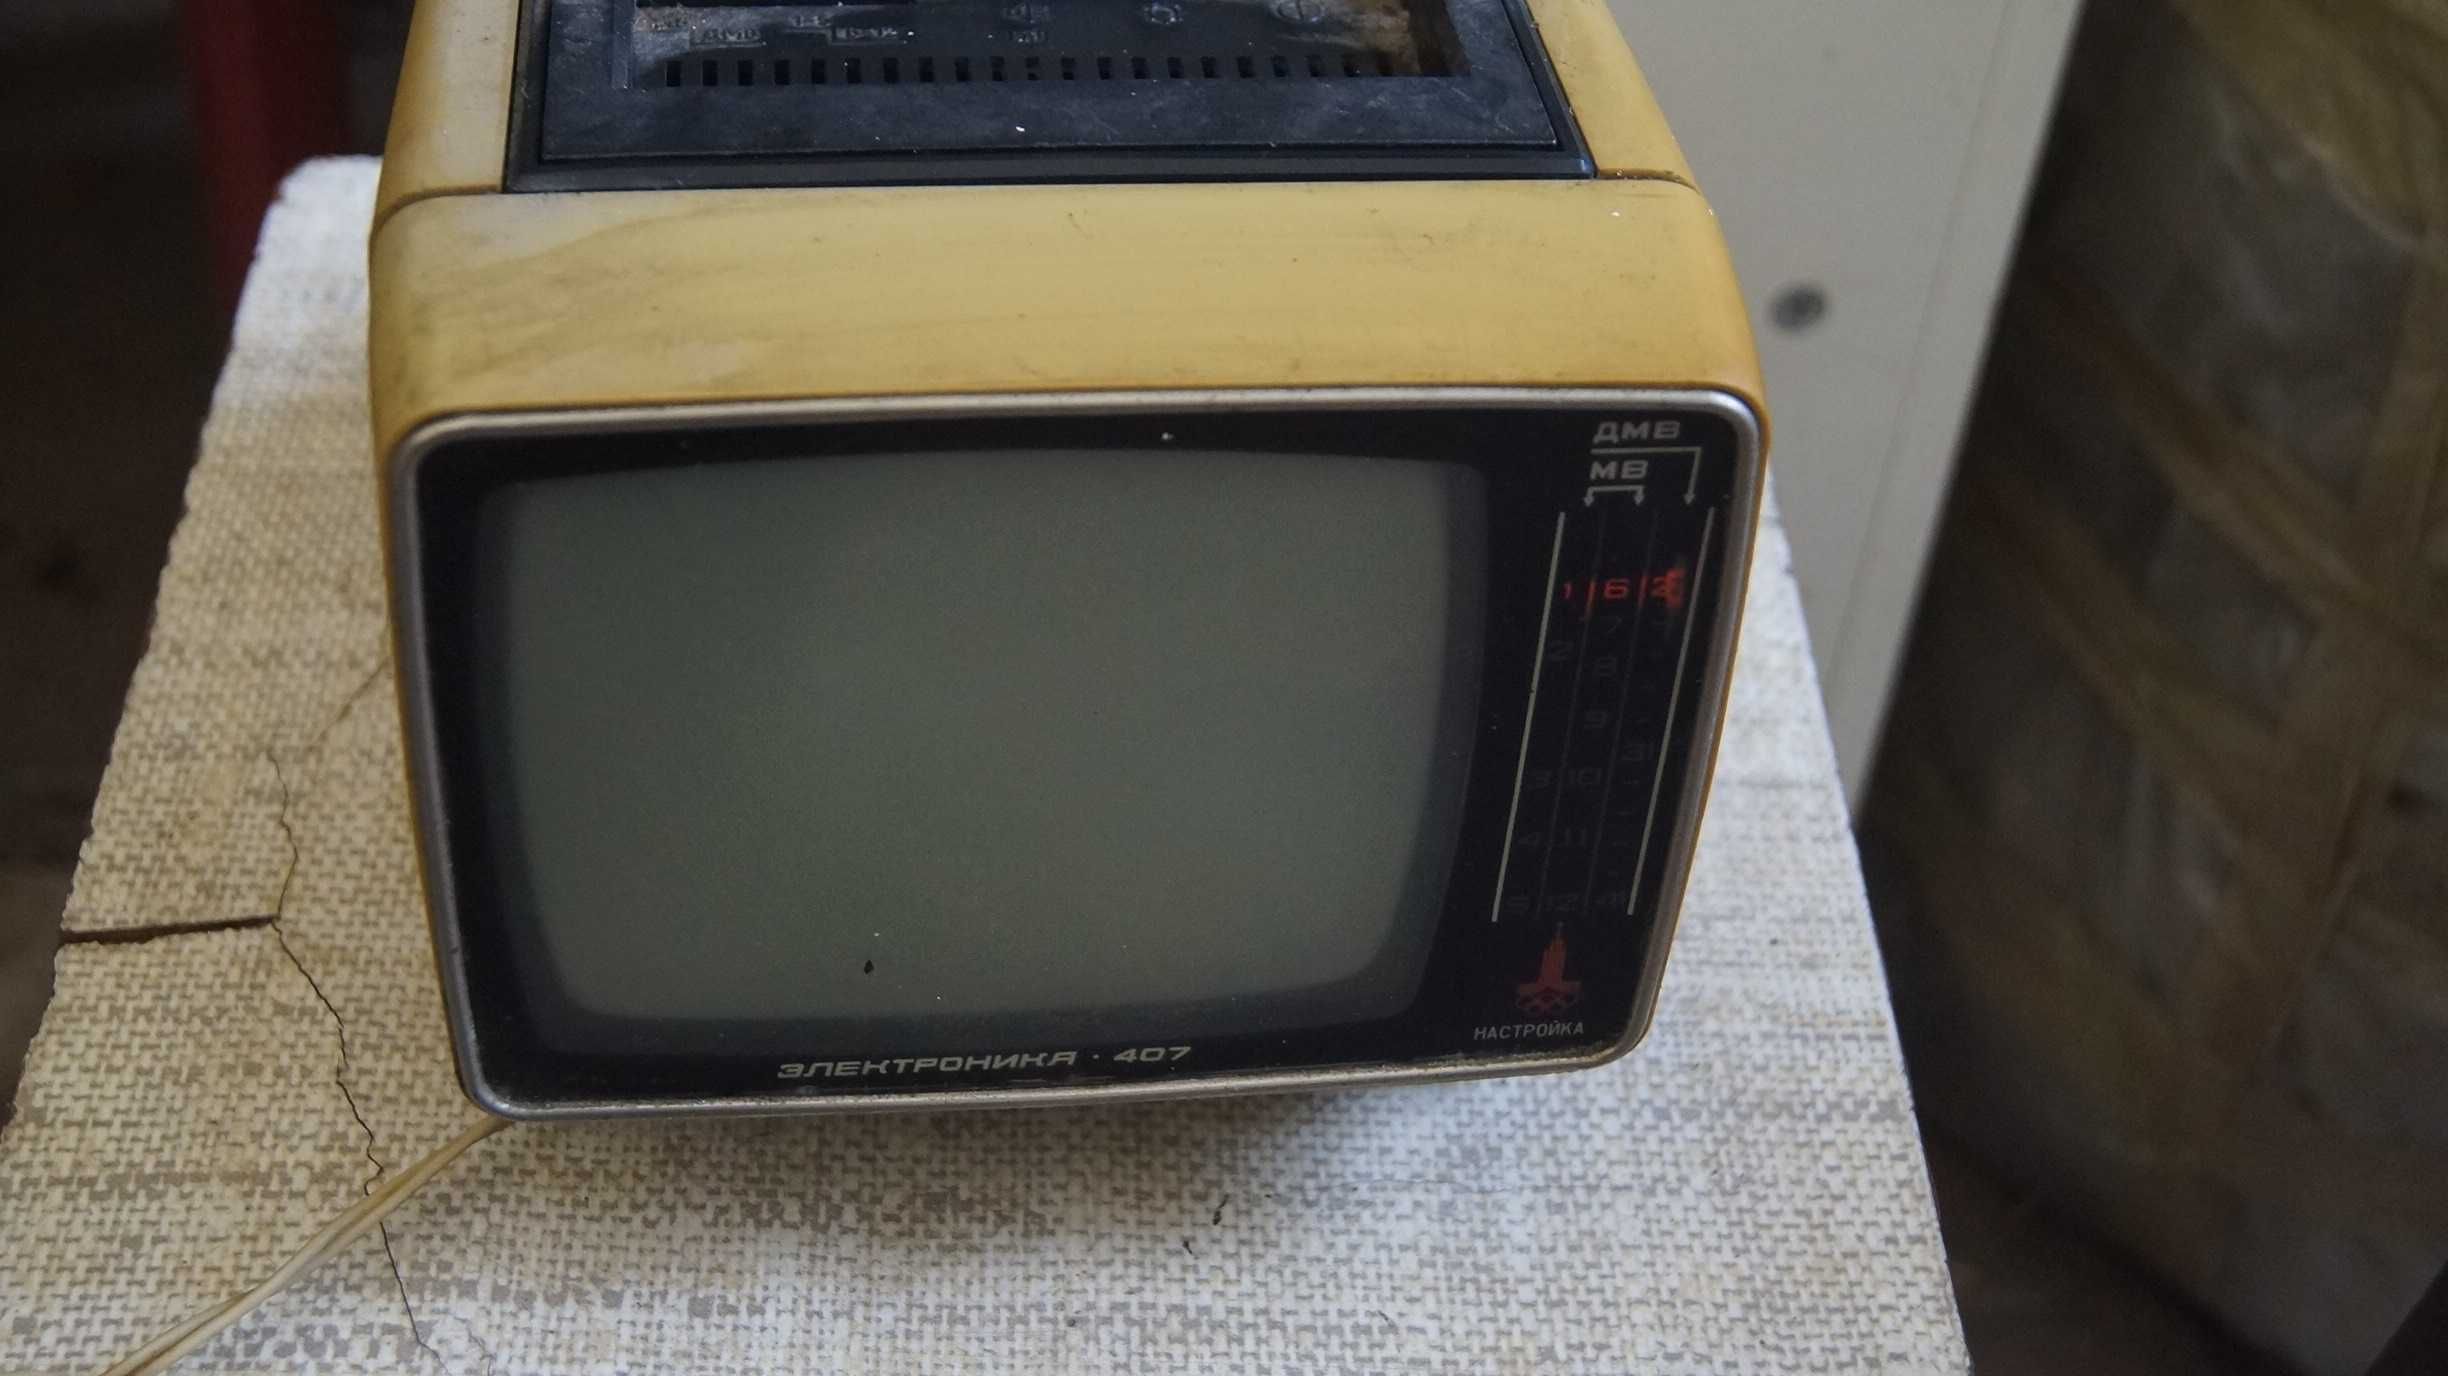 Telewizor Elektronika {Электроника} 407 ZSRR PRL vintage antyk zabytek